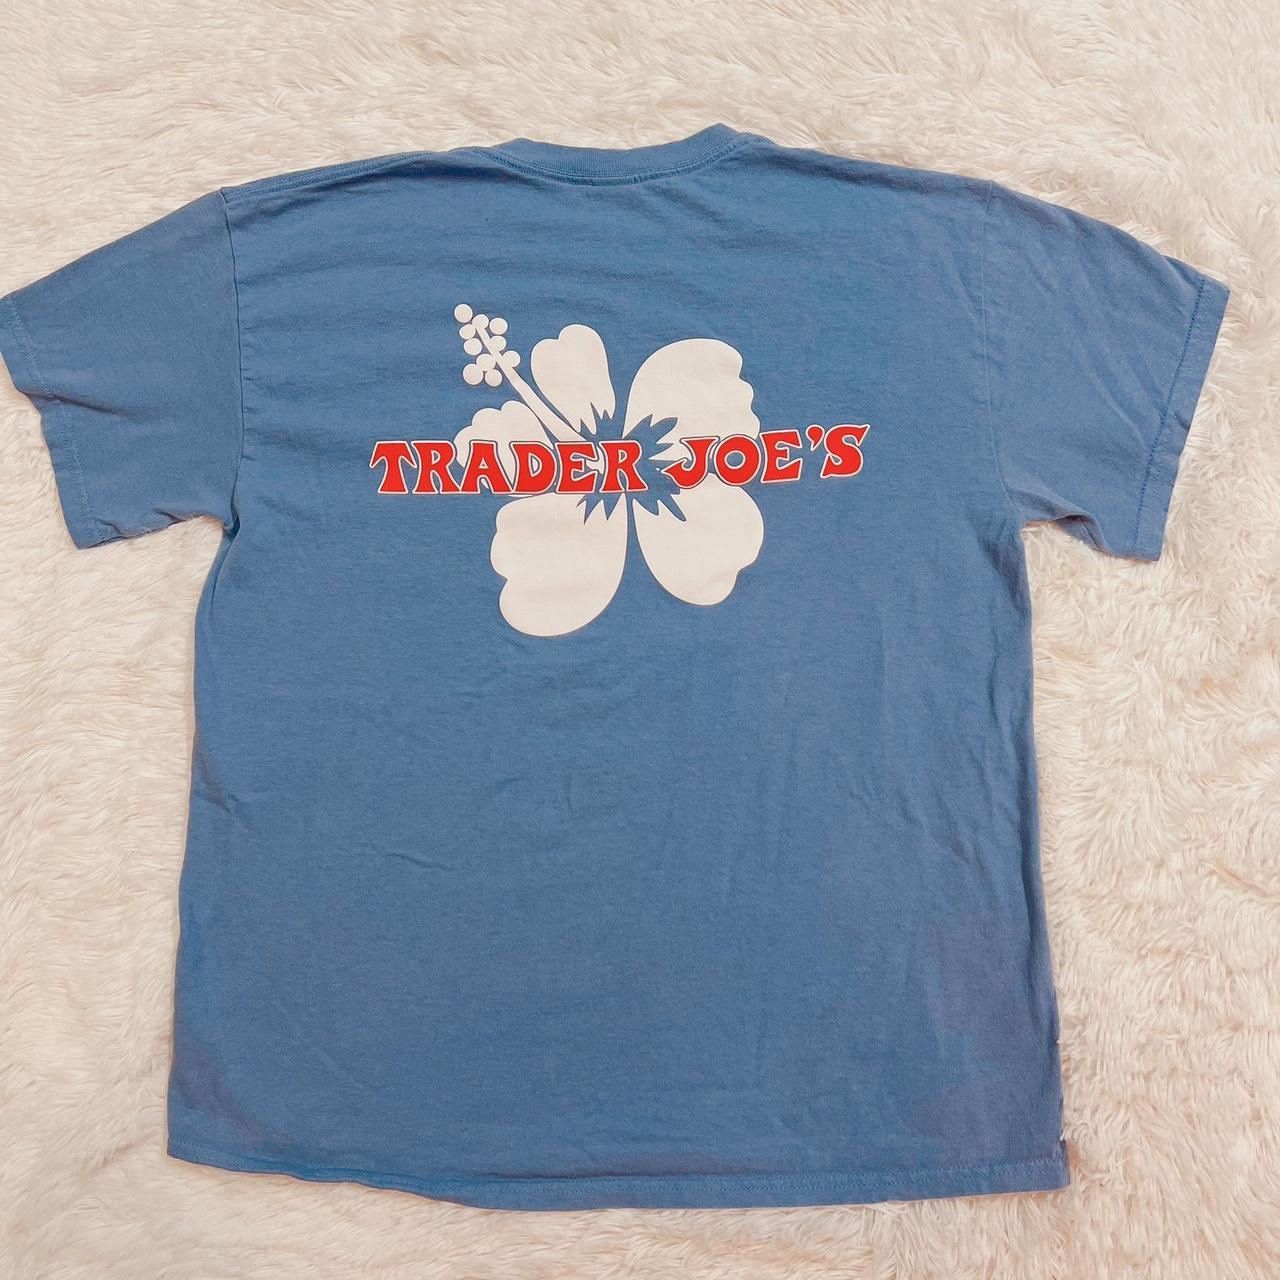 Trader Joe's Men's Blue and White T-shirt | Depop